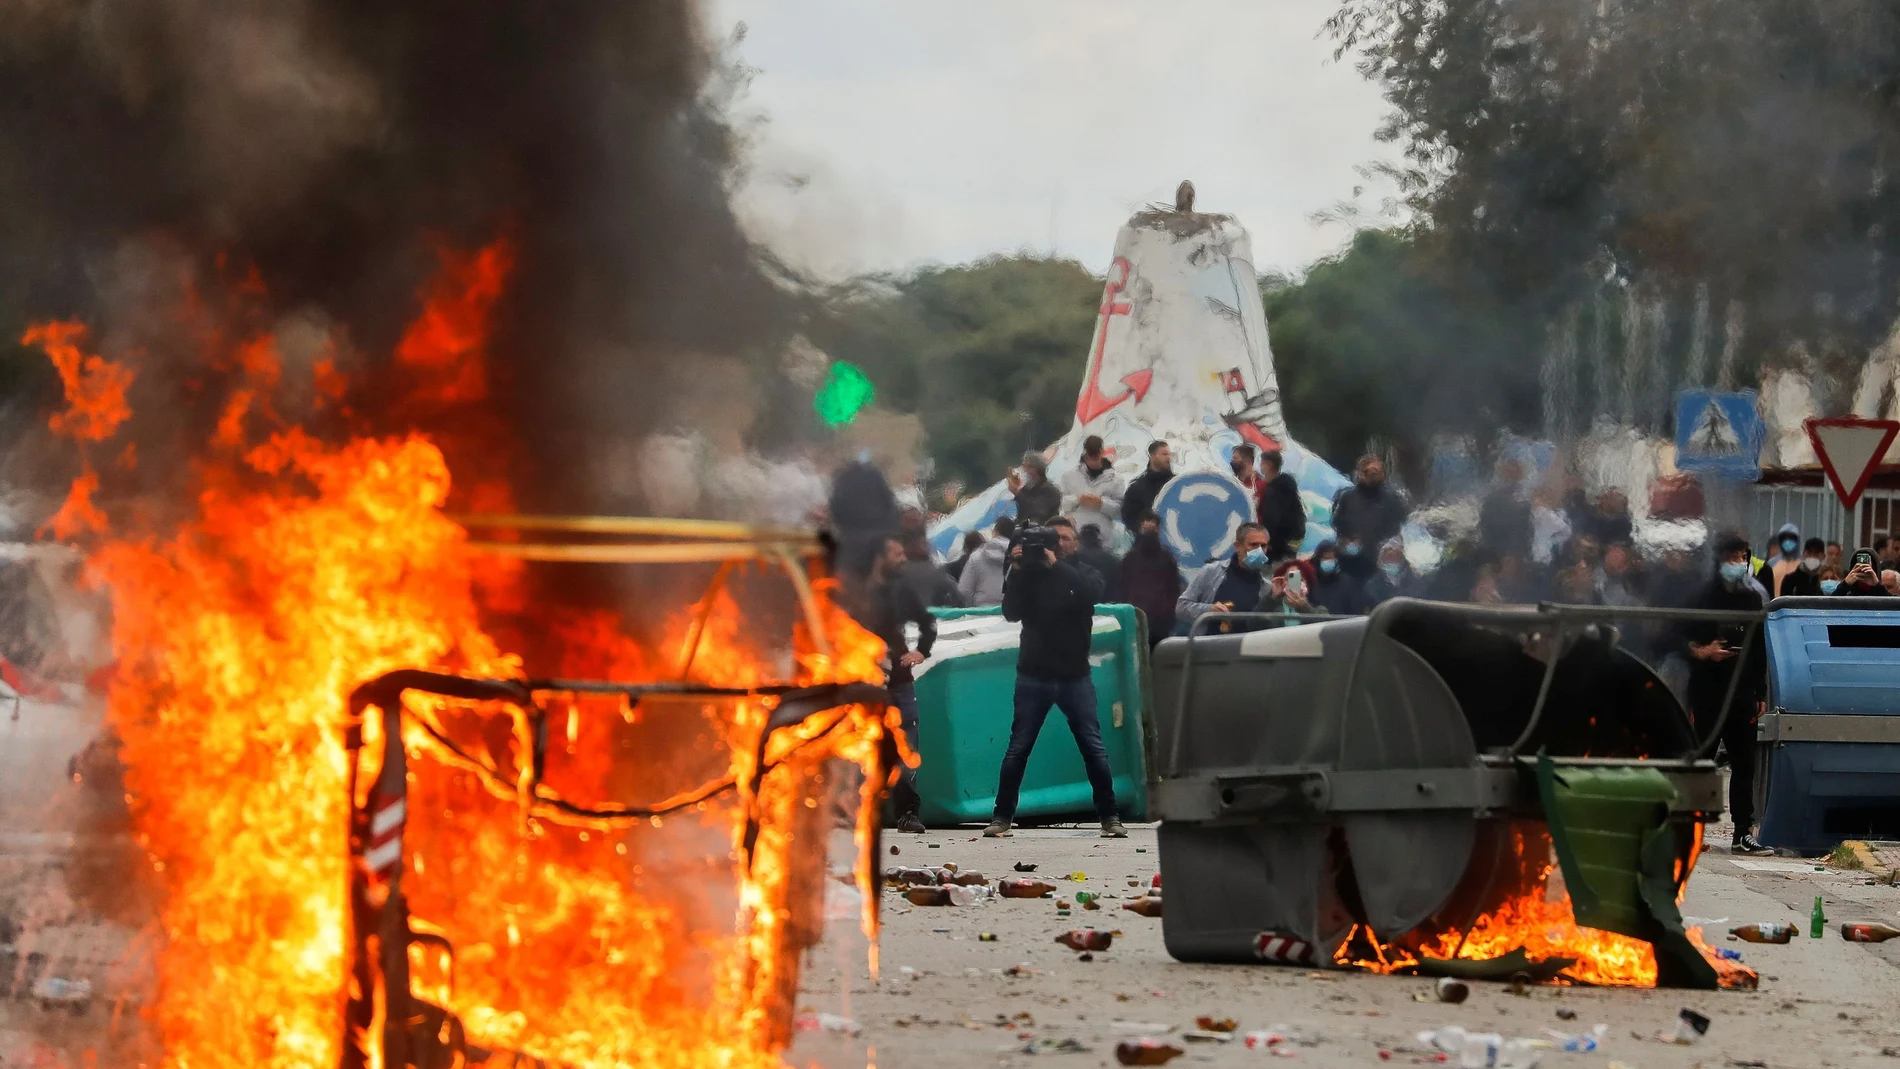 Los manifestantes quemaron contenedores